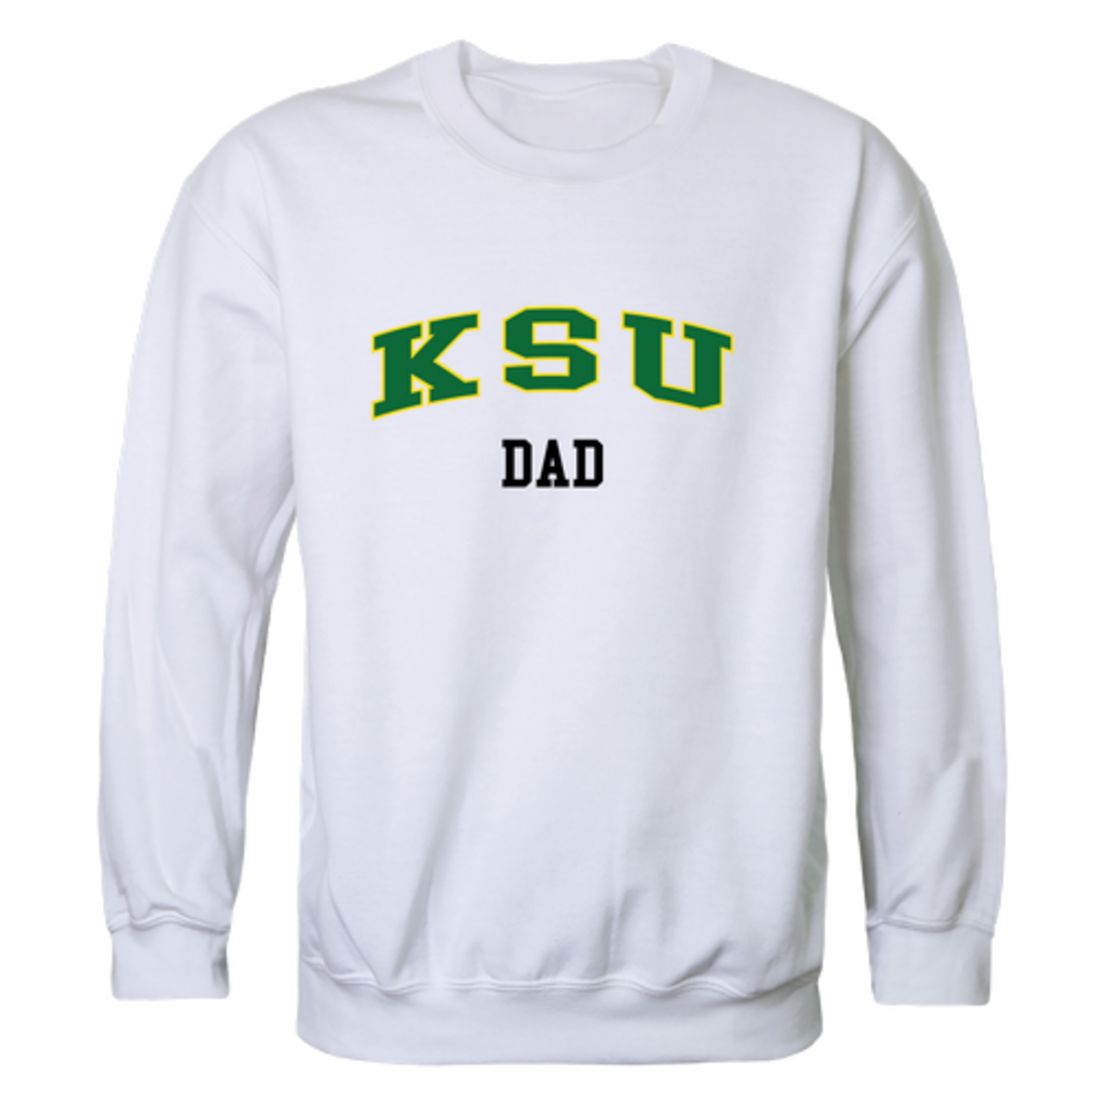 KYSU Kentucky State University Thorobreds Dad Fleece Crewneck Pullover Sweatshirt Heather Charcoal-Campus-Wardrobe